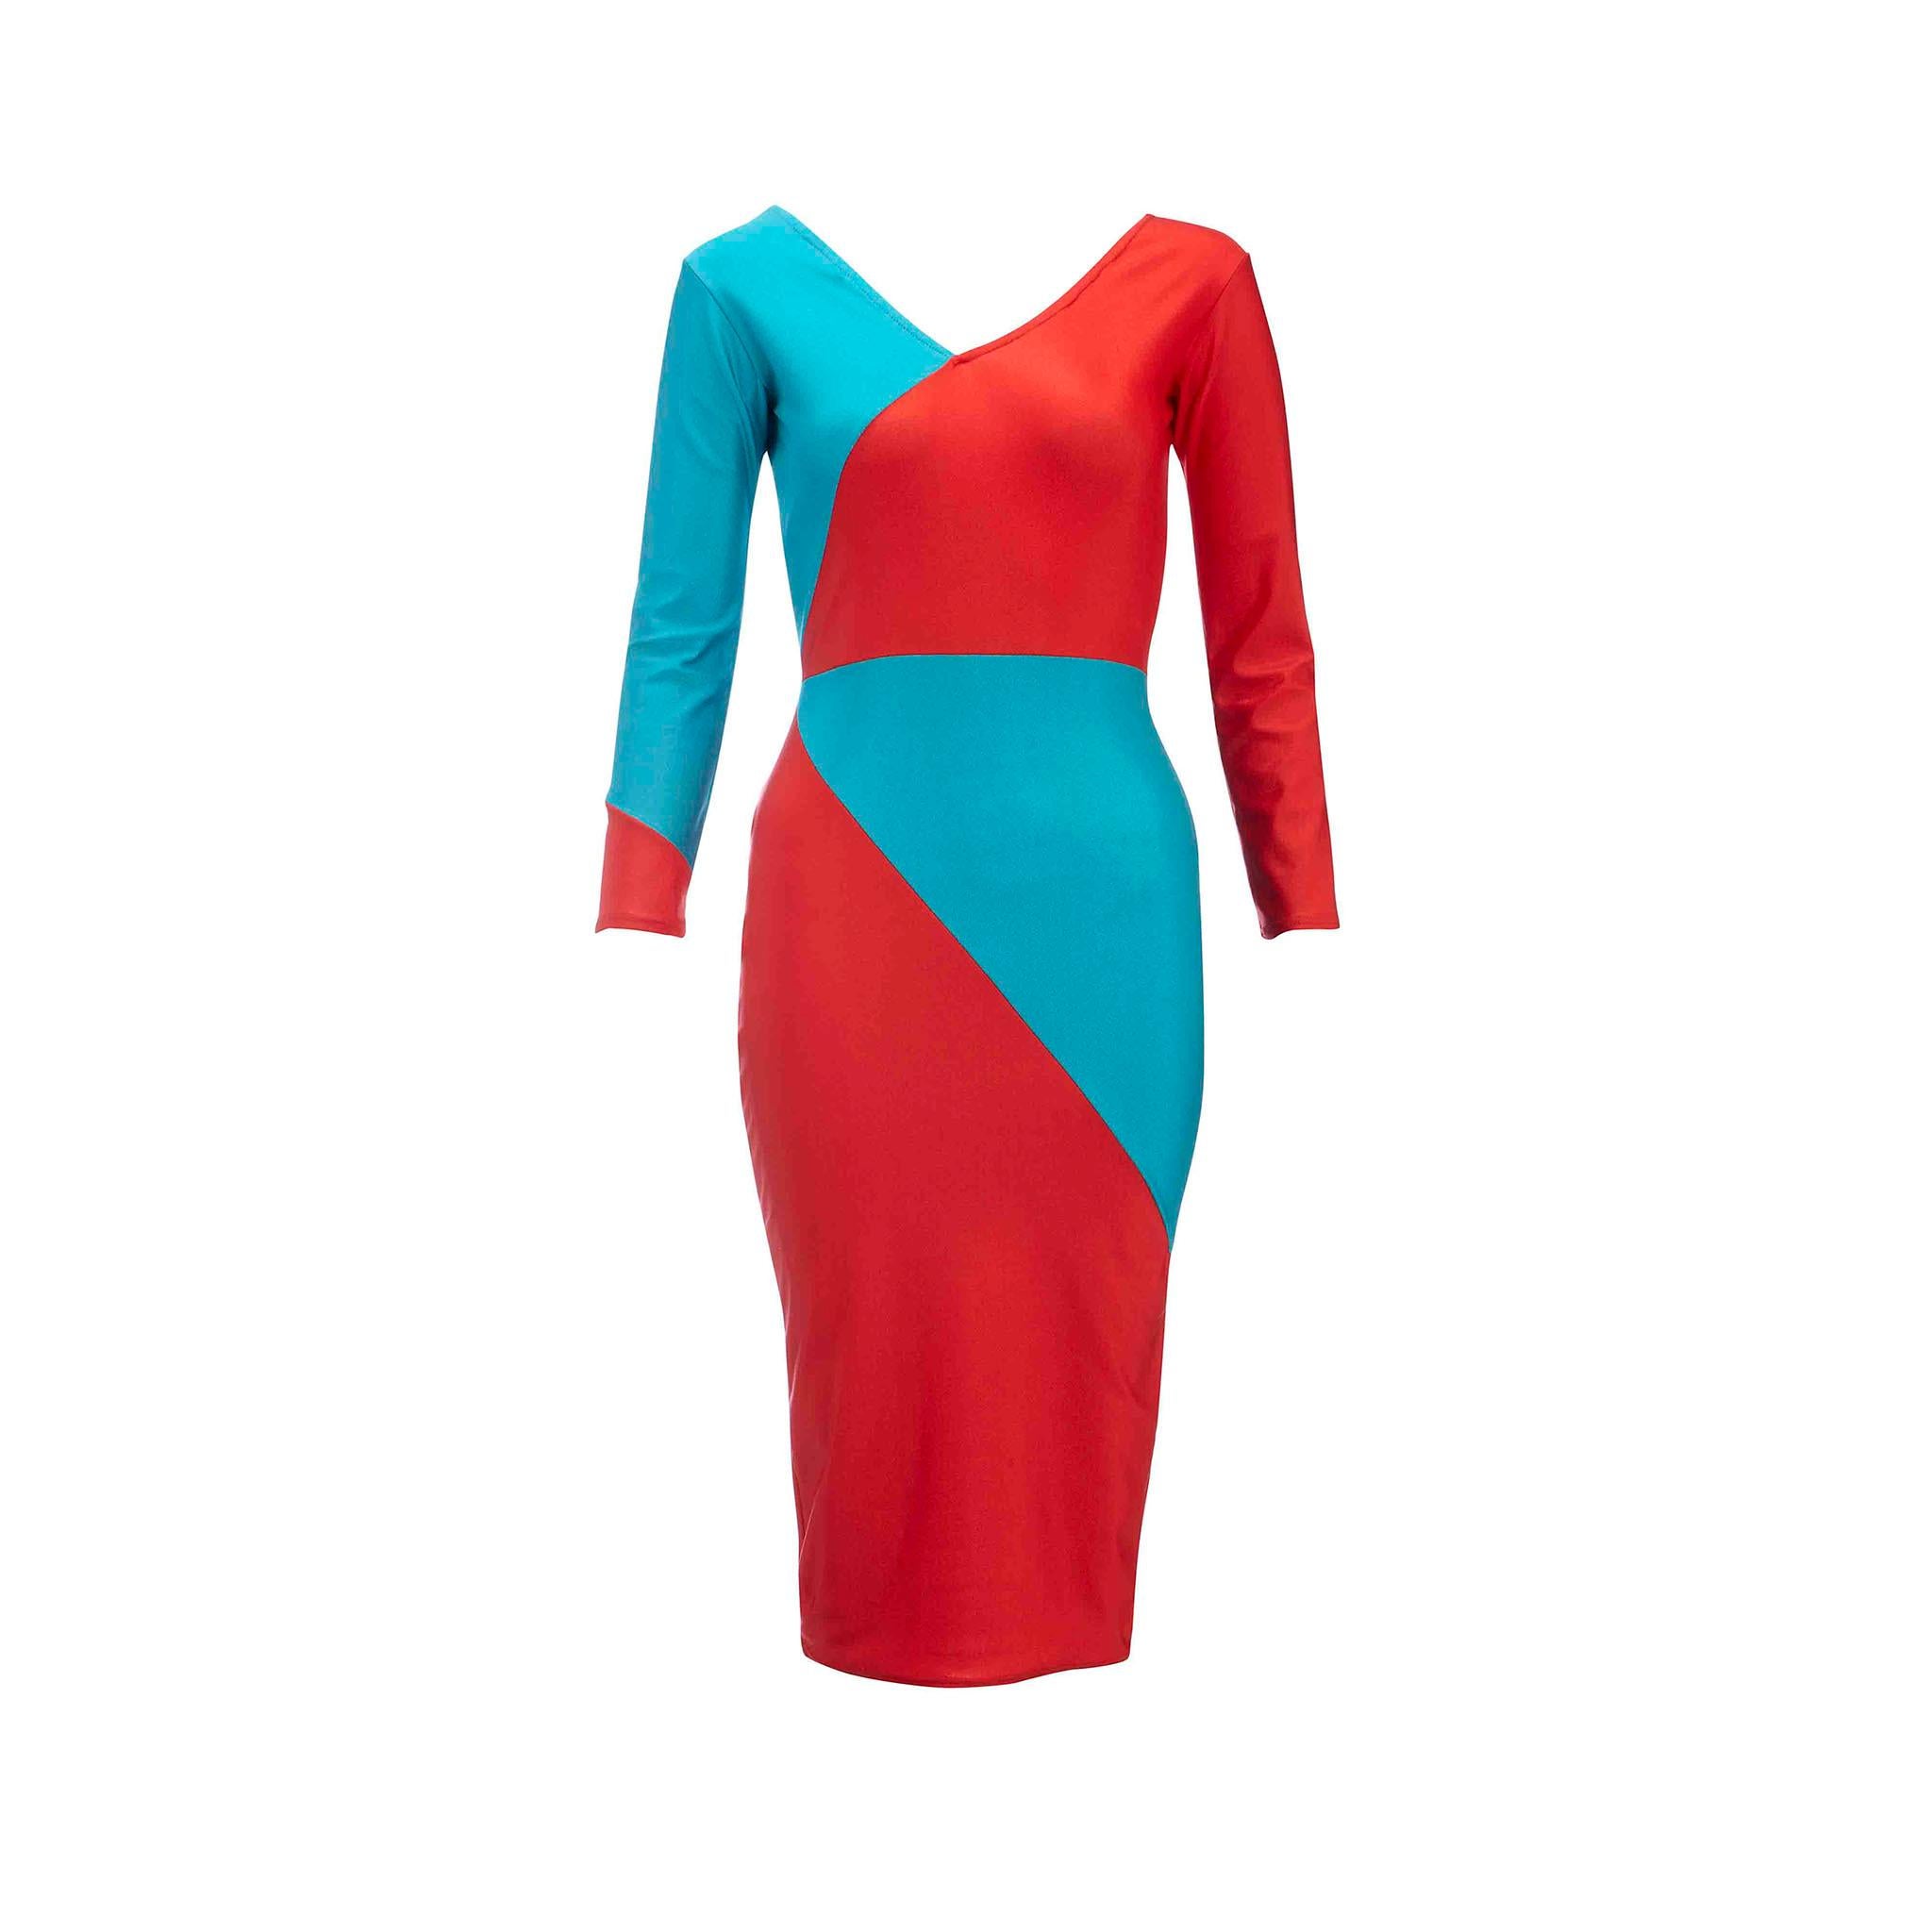 Red Paul Howie Dress - 1980s Vintage - Lycra - Panel Detailing For Sale